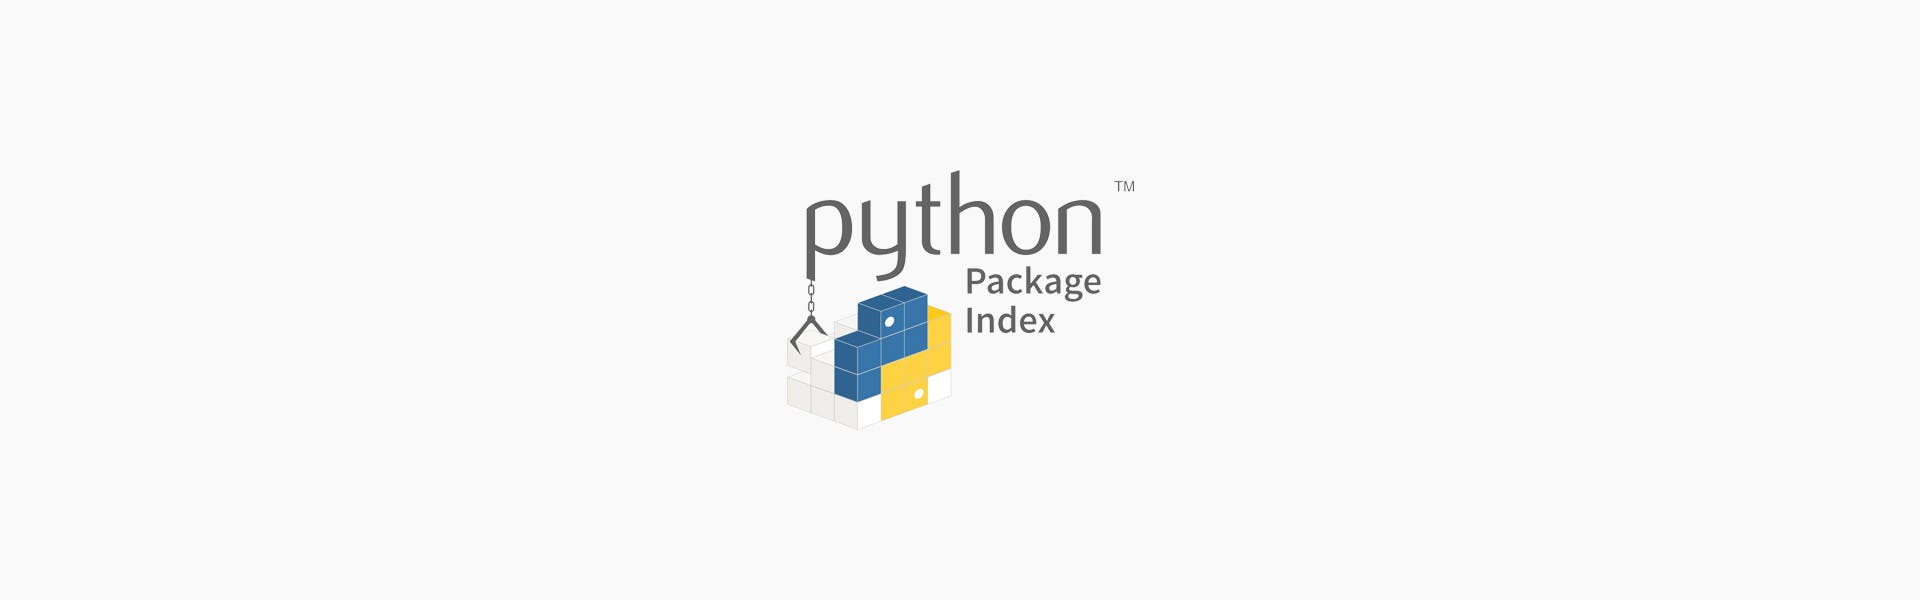 Cómo publicar un paquete de Python en PyPI: guía paso a paso